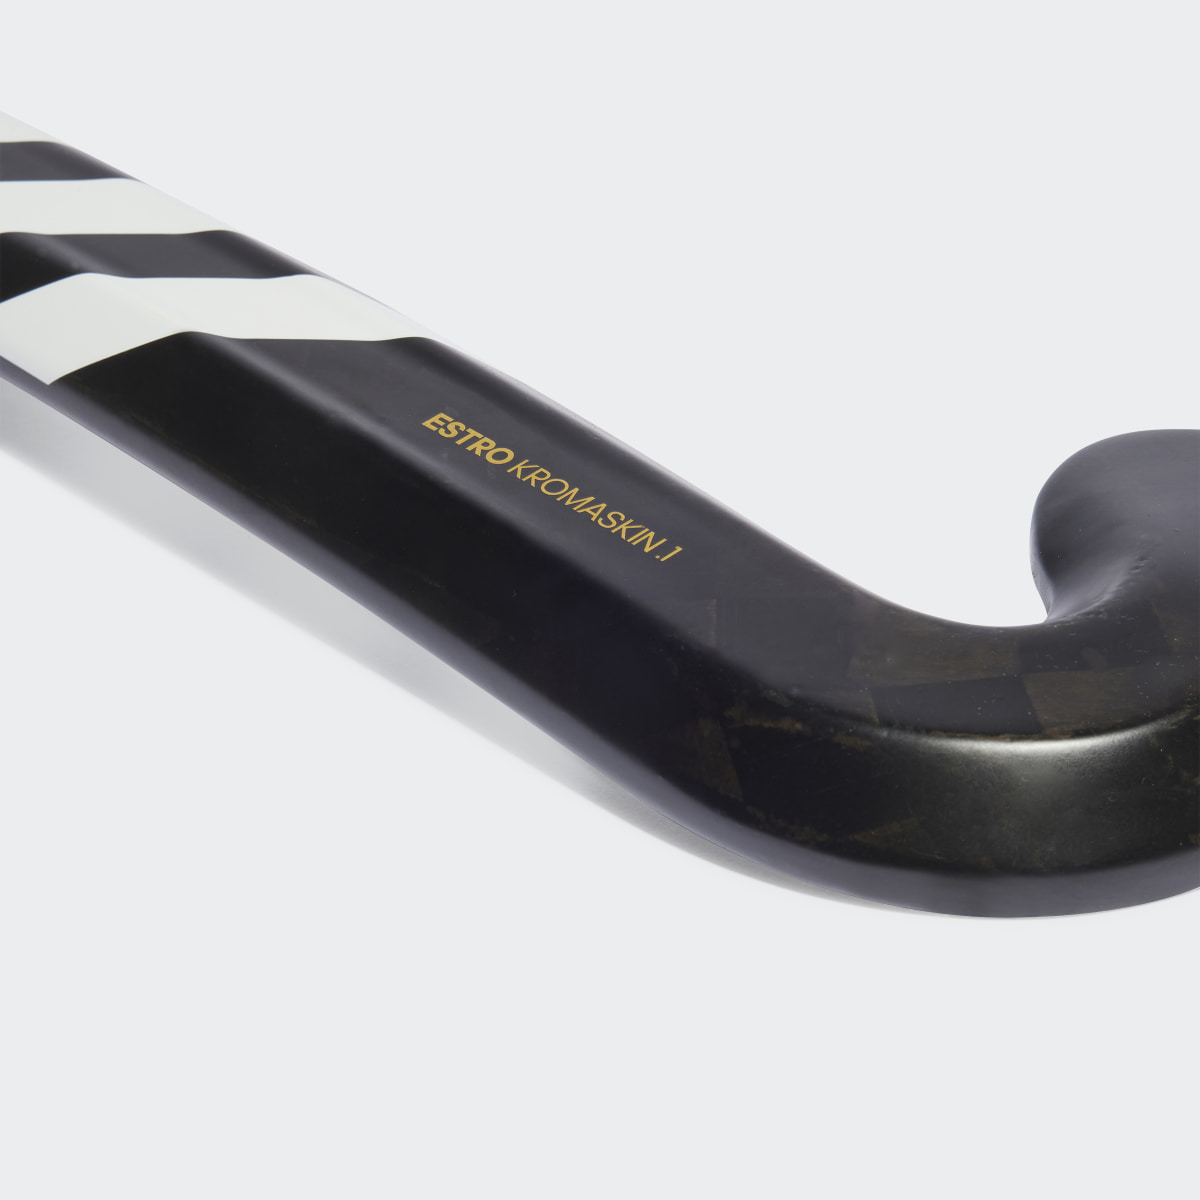 Adidas Estro Kromaskin.1 Black/Gold Hockey Stick 95 cm. 6